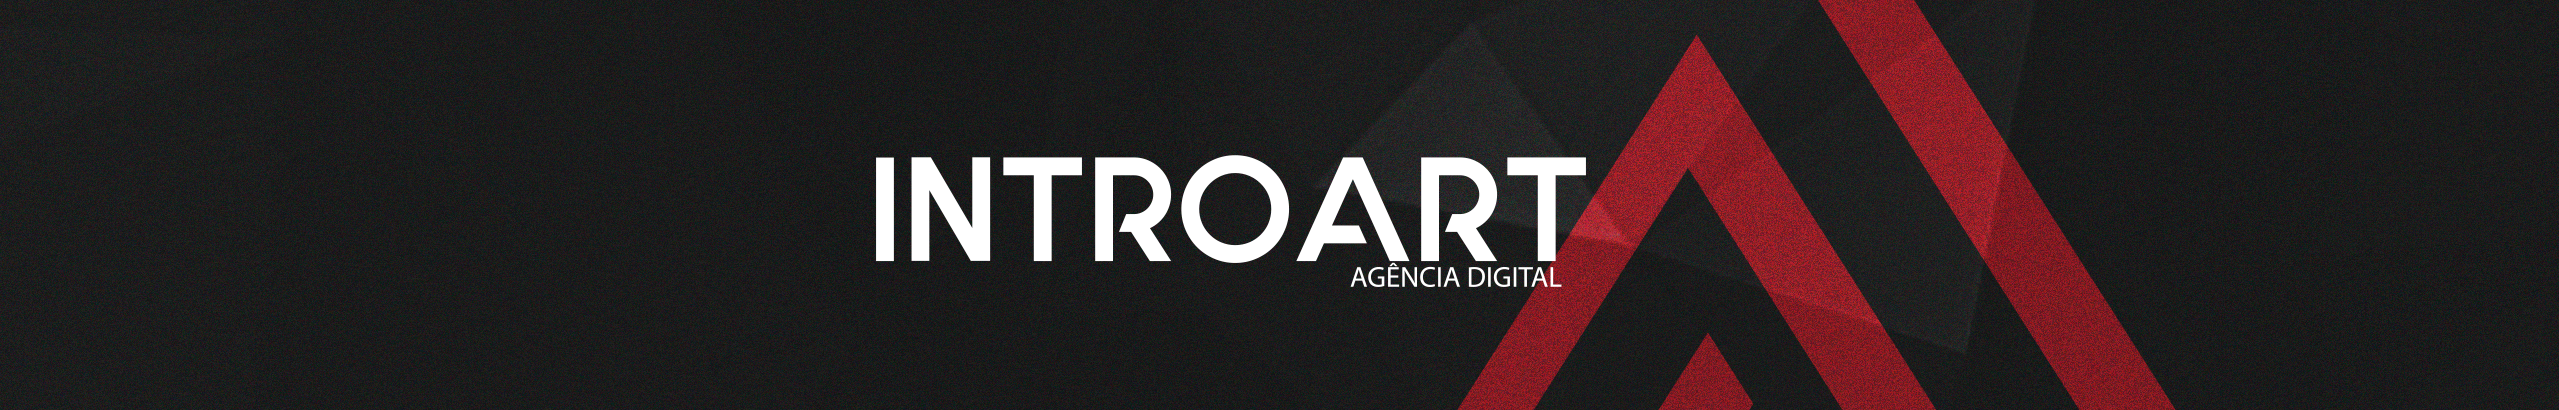 INTROART AGÊNCIA DIGITAL's profile banner